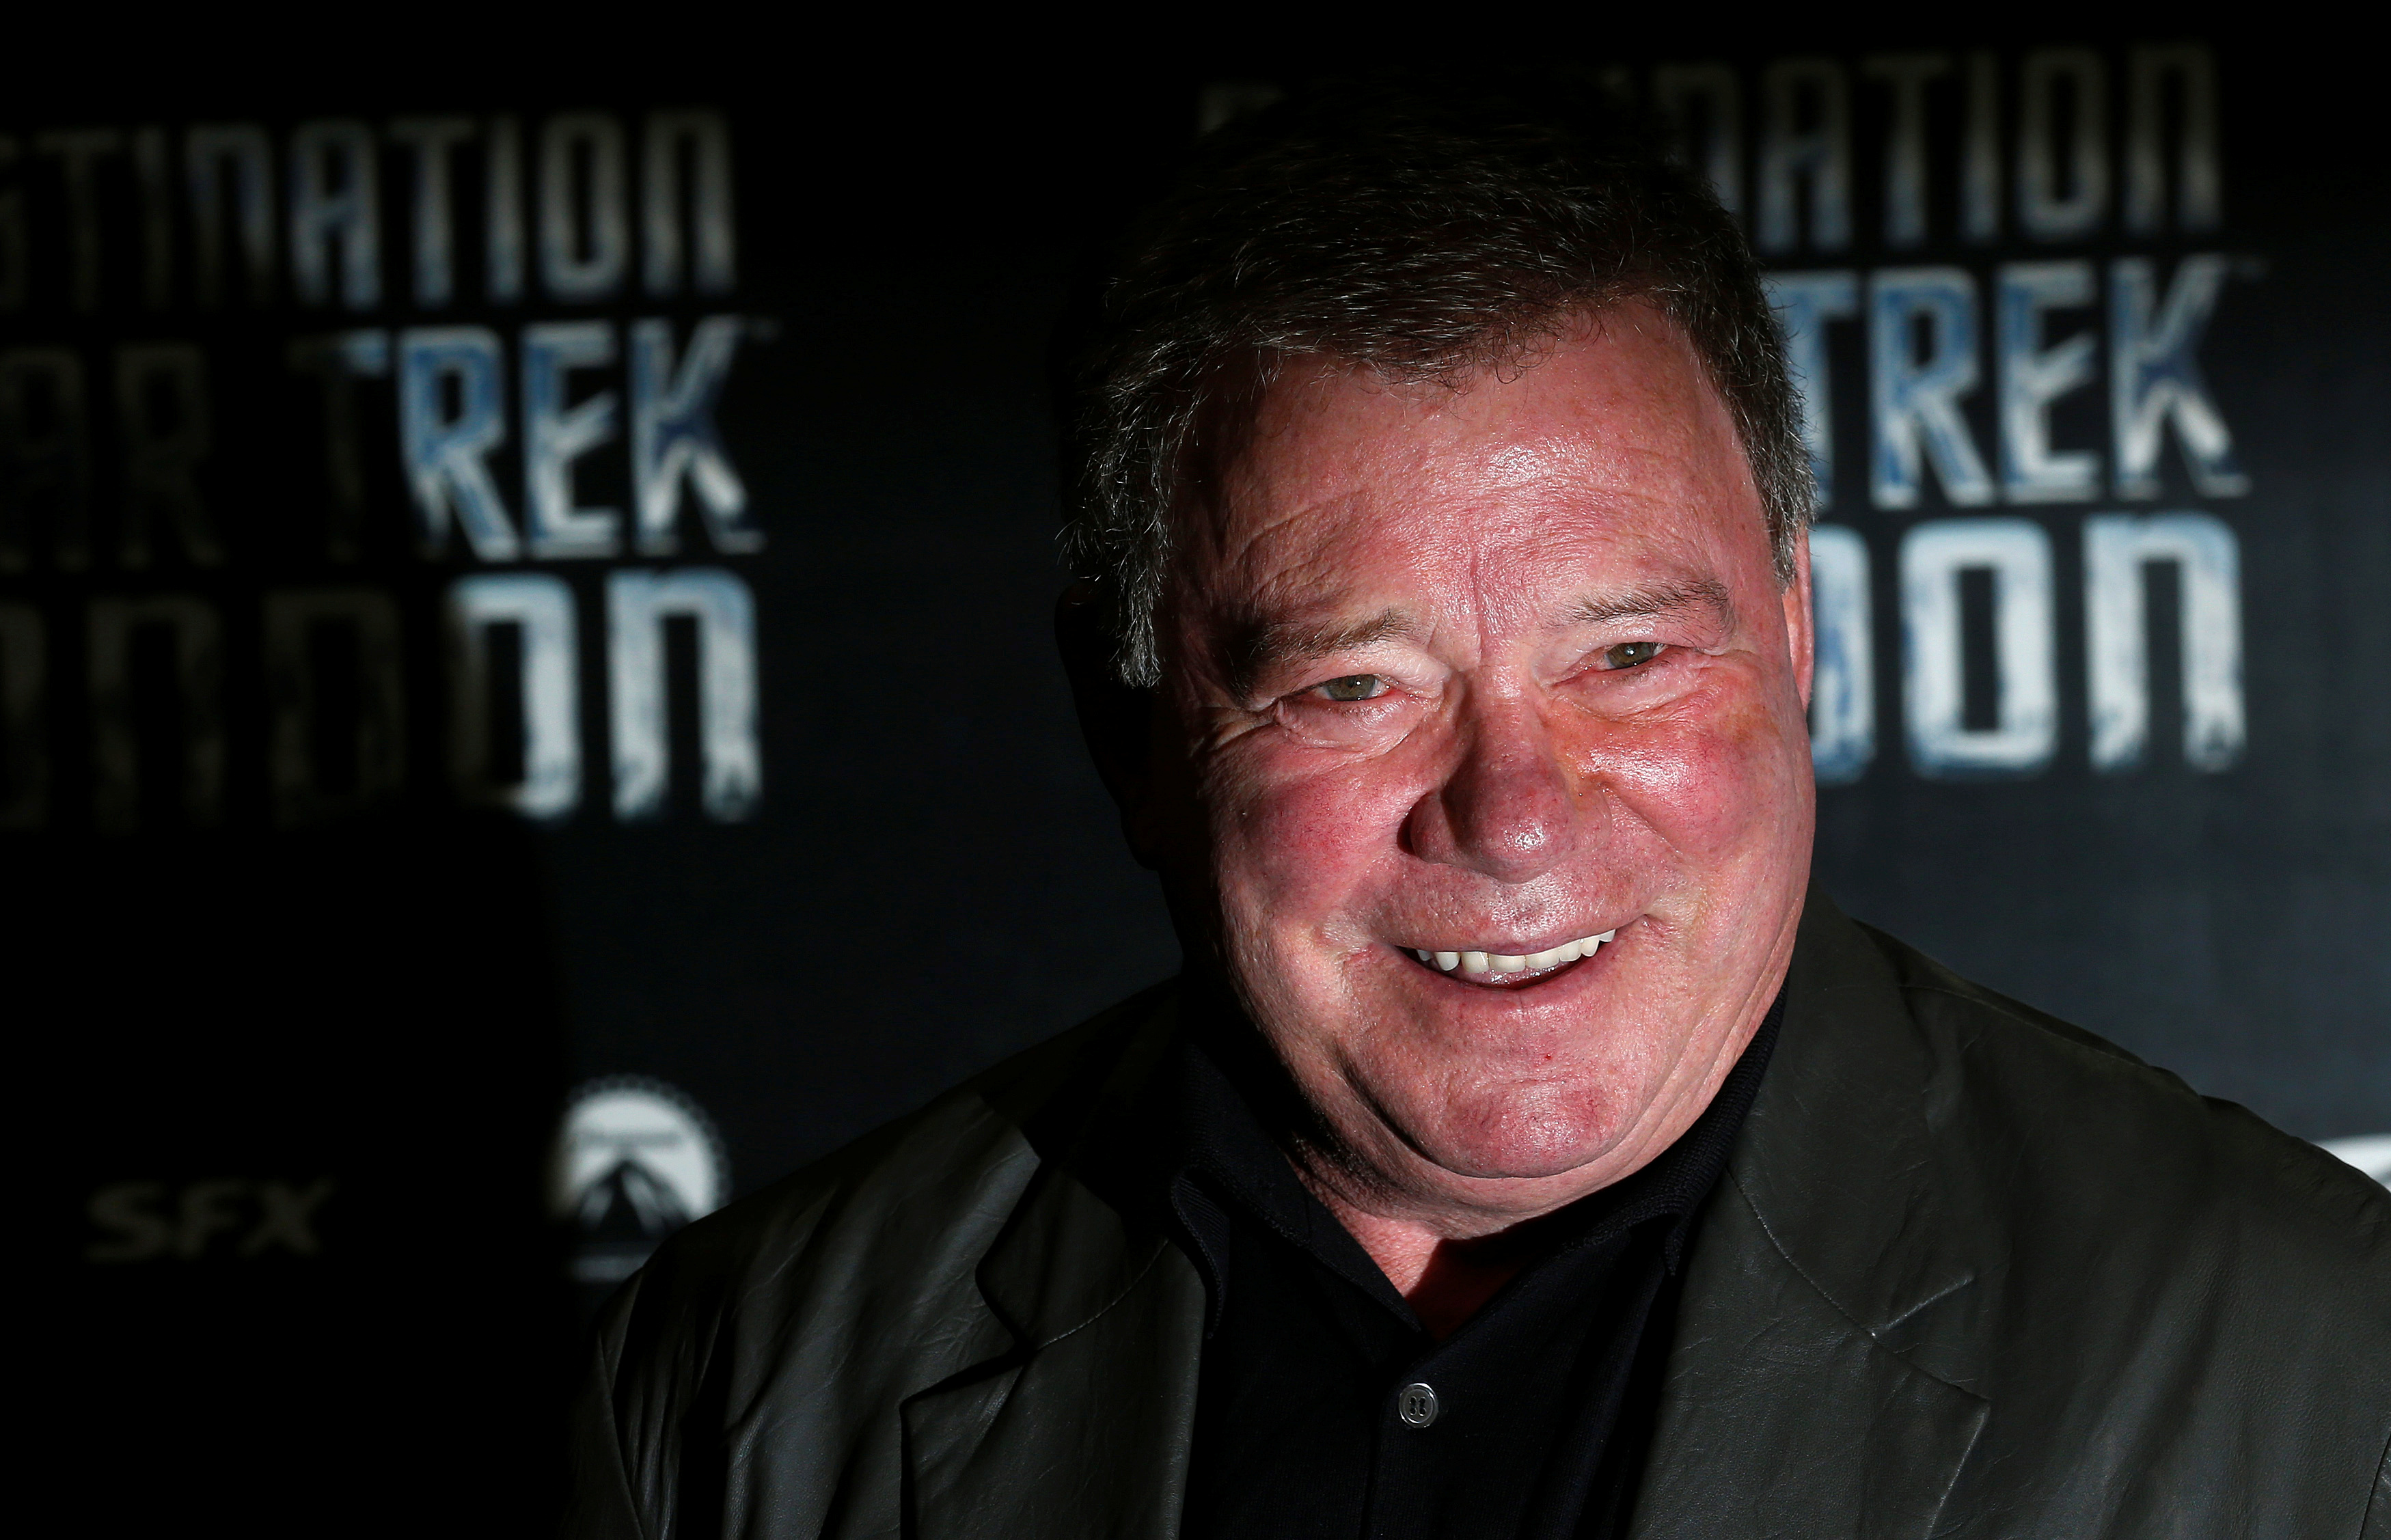 Shatner who plays Captain James T. Kirk in the original version of Star Trek arrives at the Destination Star Trek London event